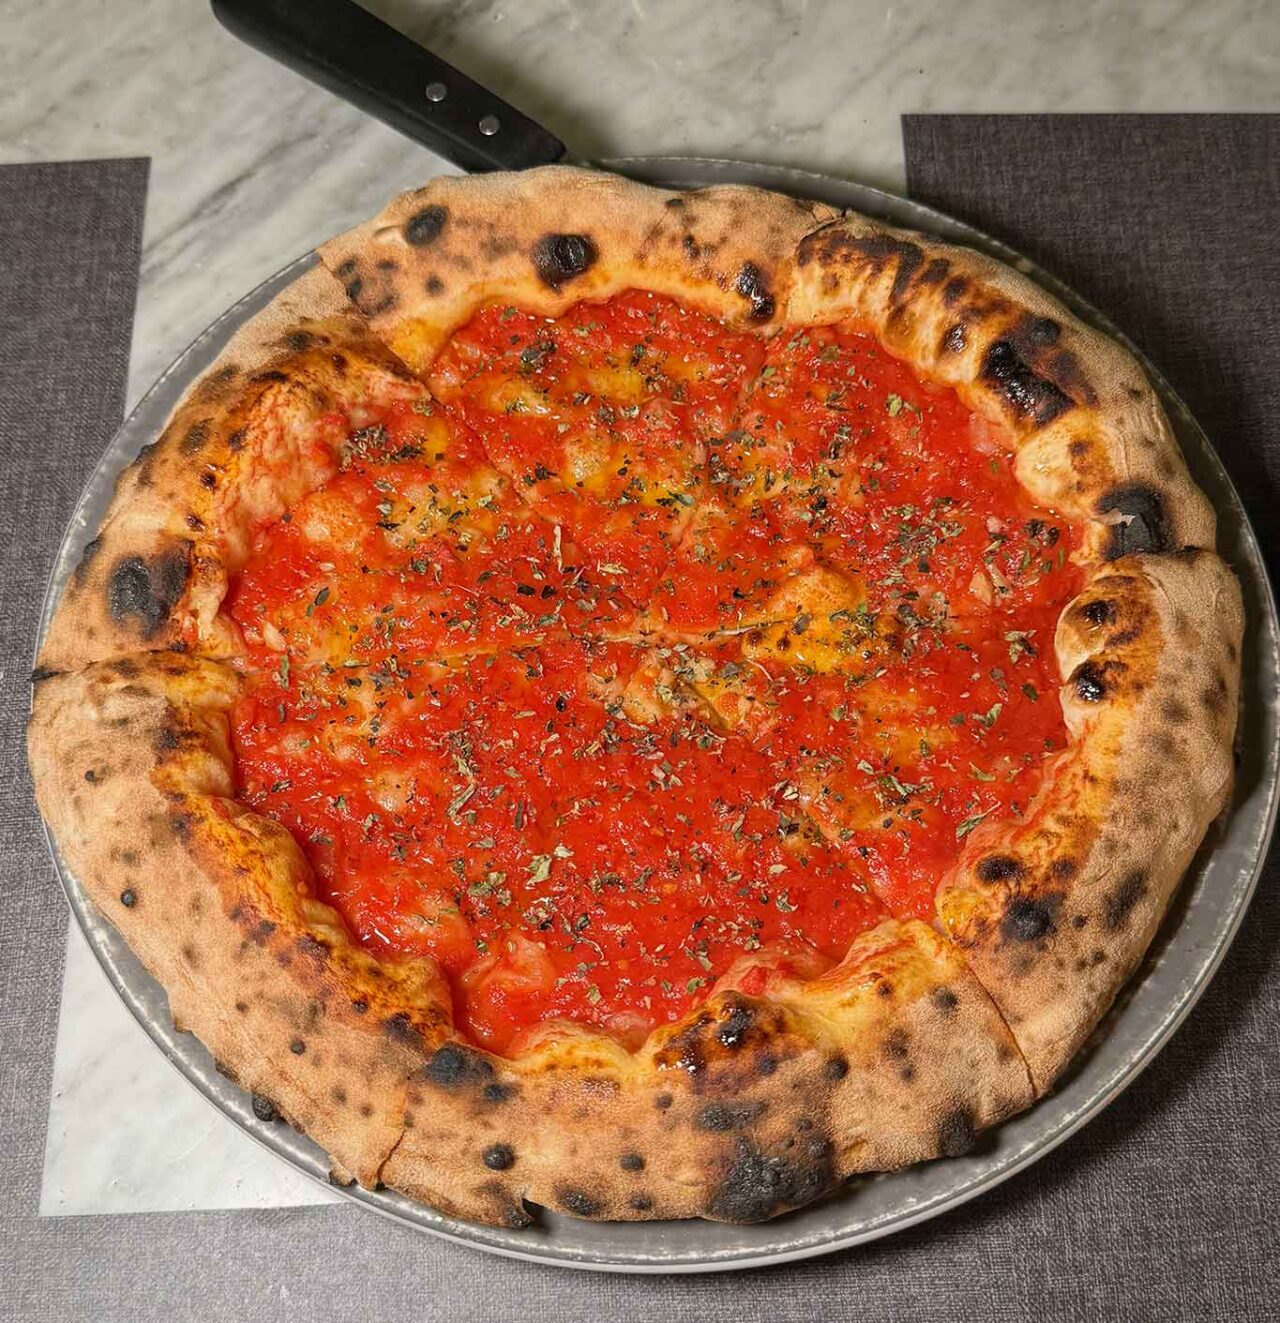 Migliori pizze Marinara a Caserta e provincia: Pepe in Grani